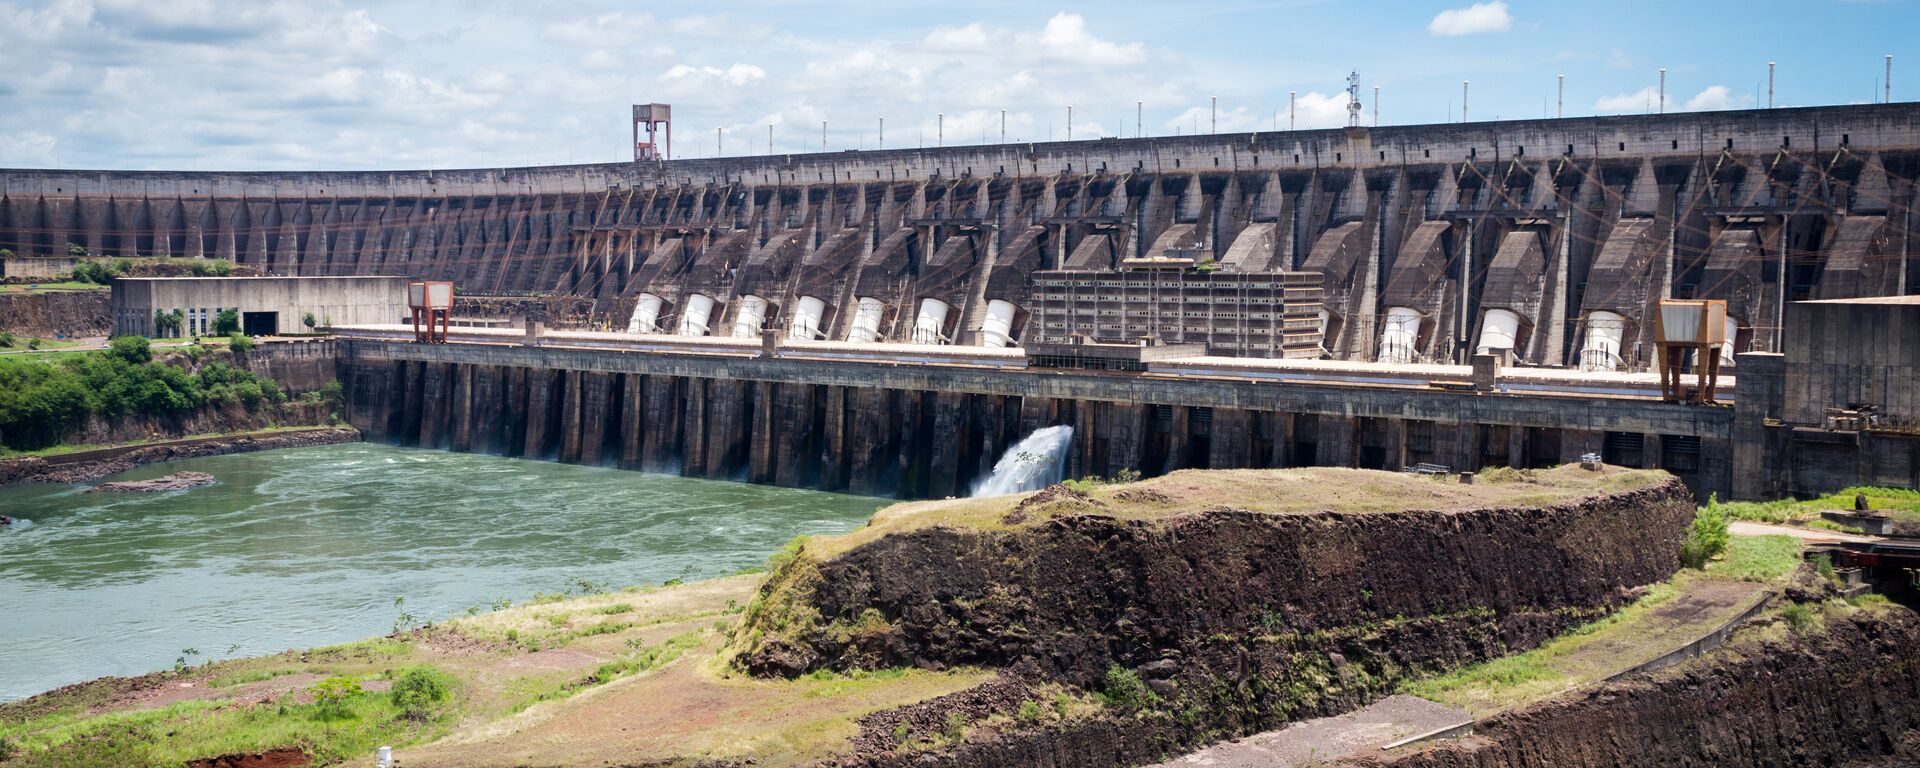 La represa hidroeléctrica de Itaipú - Sputnik Mundo, 1920, 31.05.2018